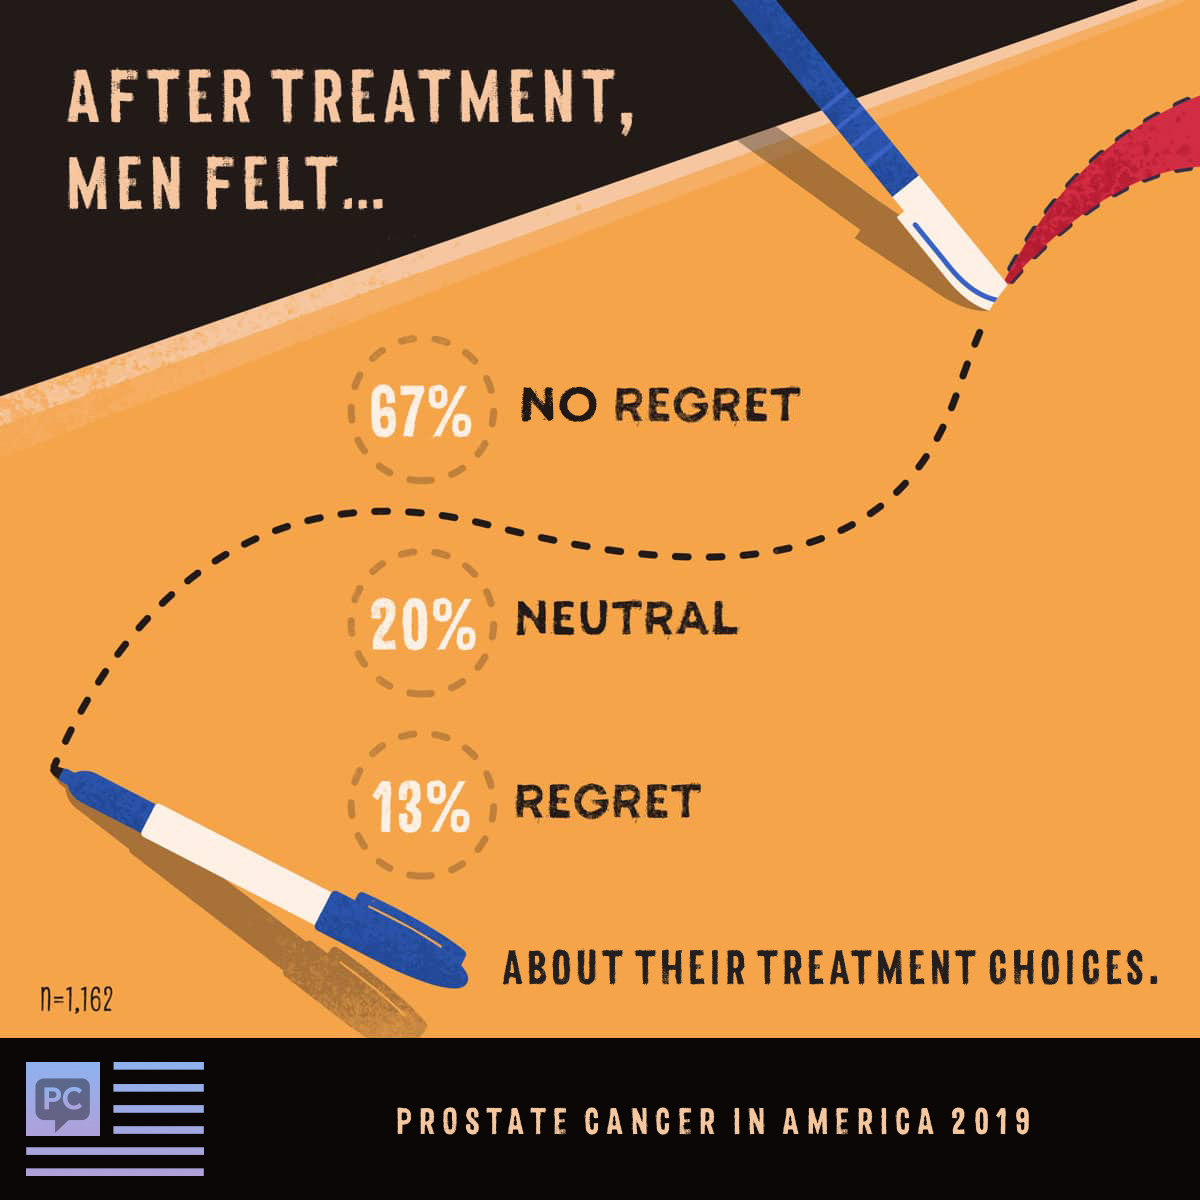 After treatment, men felt no regret (67%), neutral (20%), regret (13%) about their treatment choice.